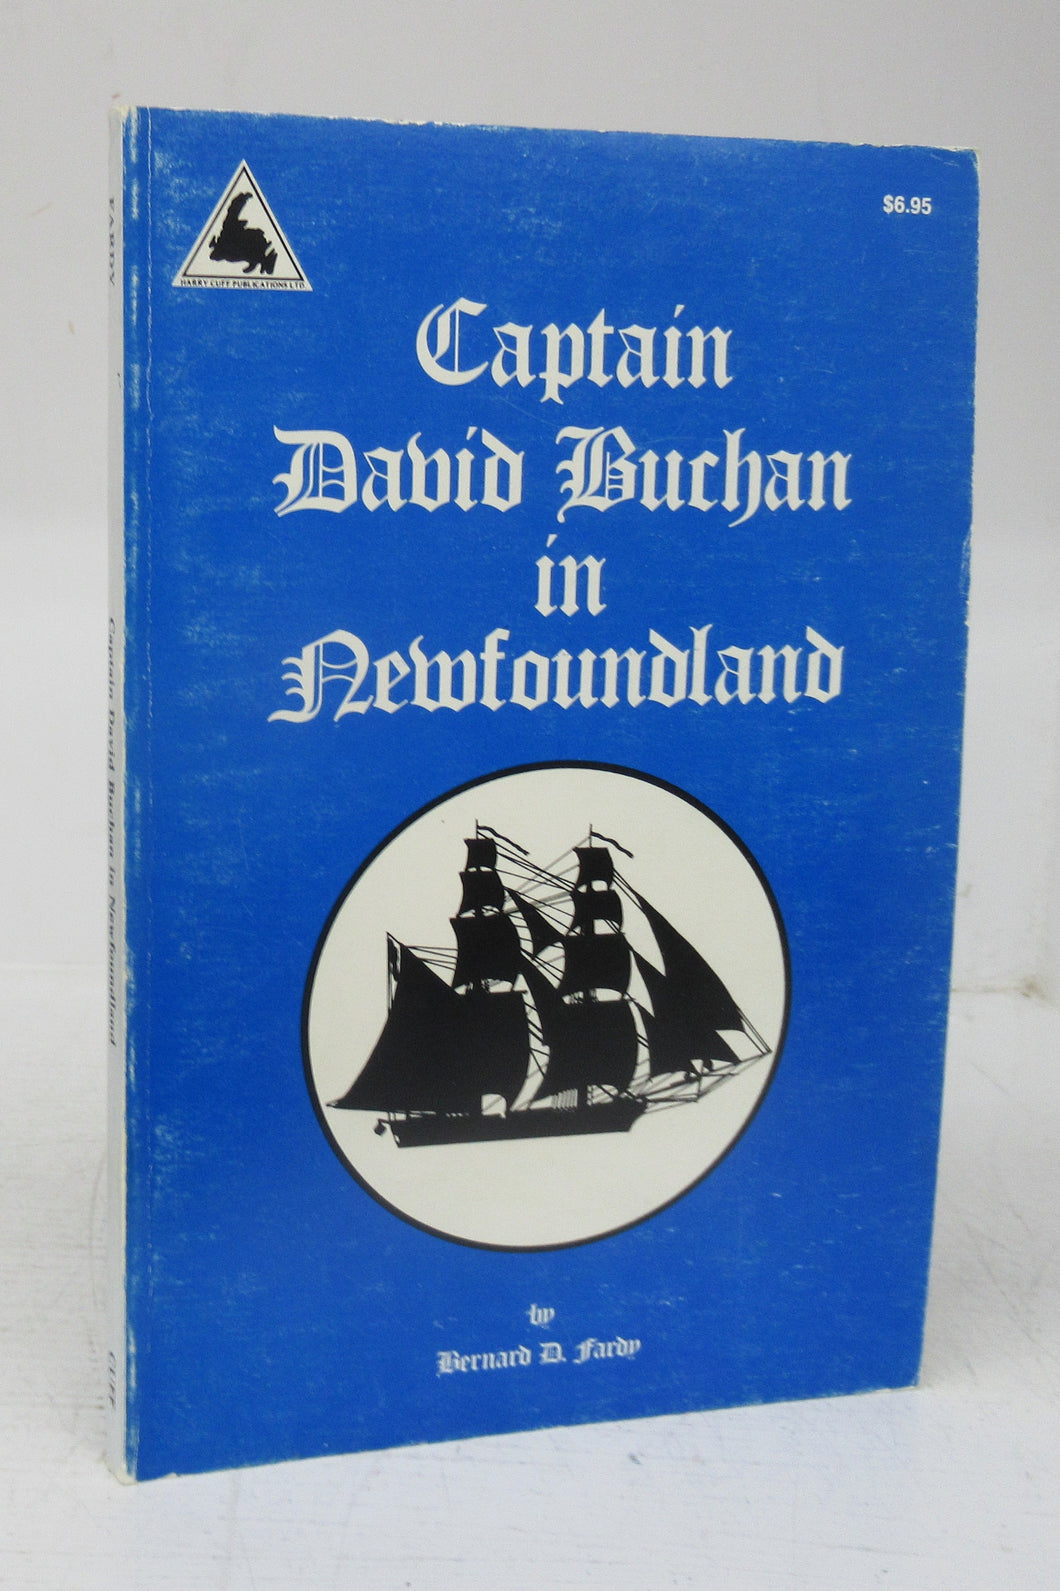 Captain David Buchan in Newfoundland